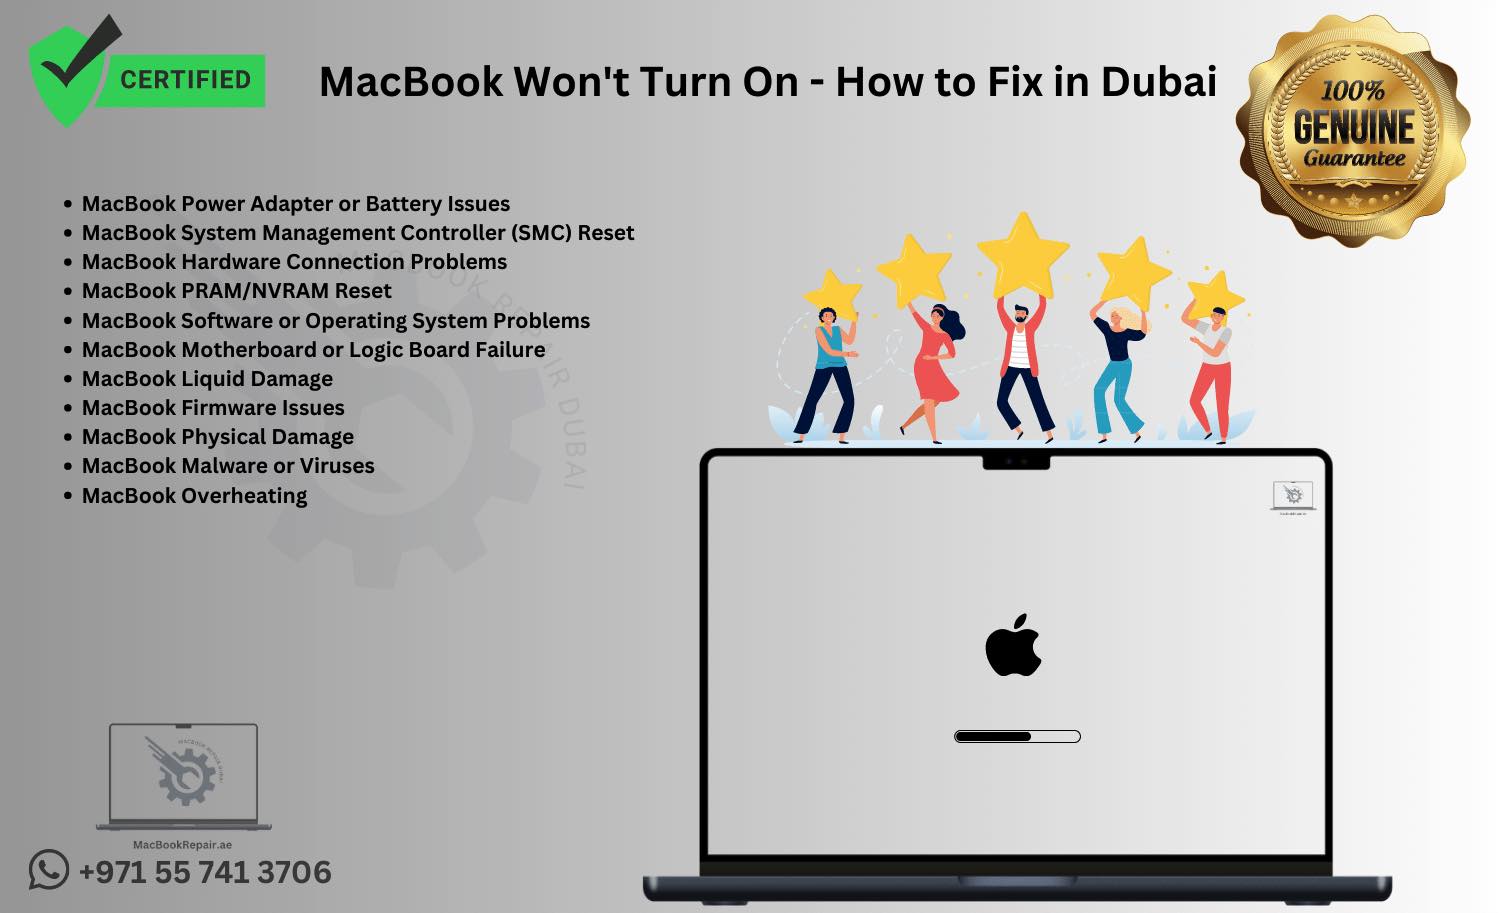 MacBook Won't Turn On - How to Fix in Dubai